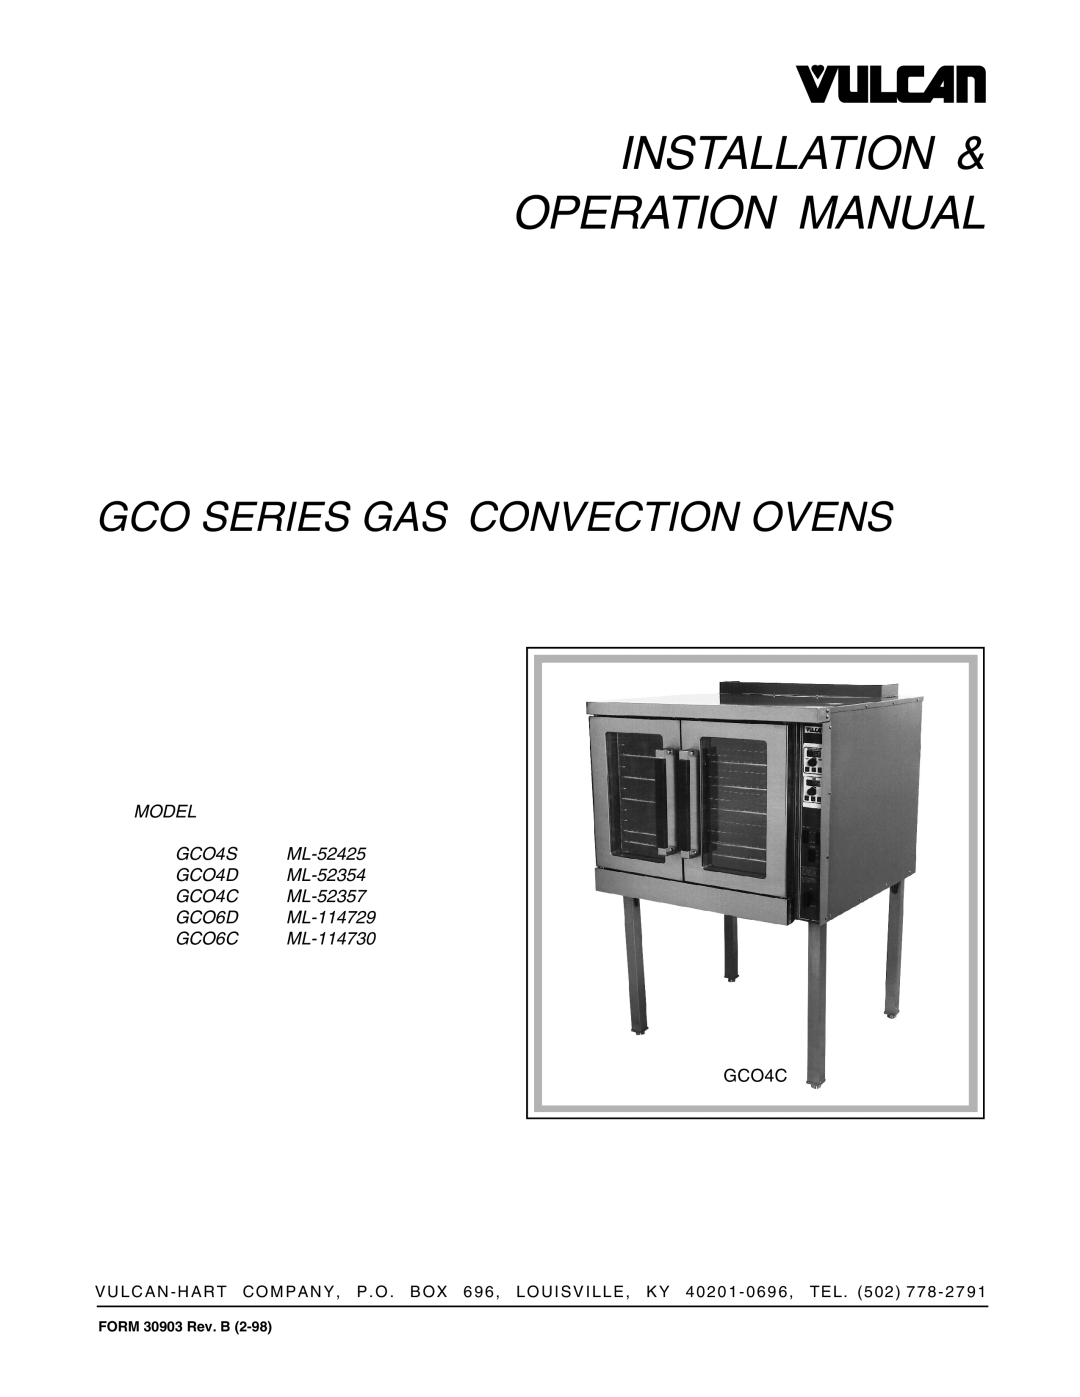 Vulcan-Hart GCO6D ML-114729 operation manual Installation Operation Manual, Gco Series Gas Convection Ovens 